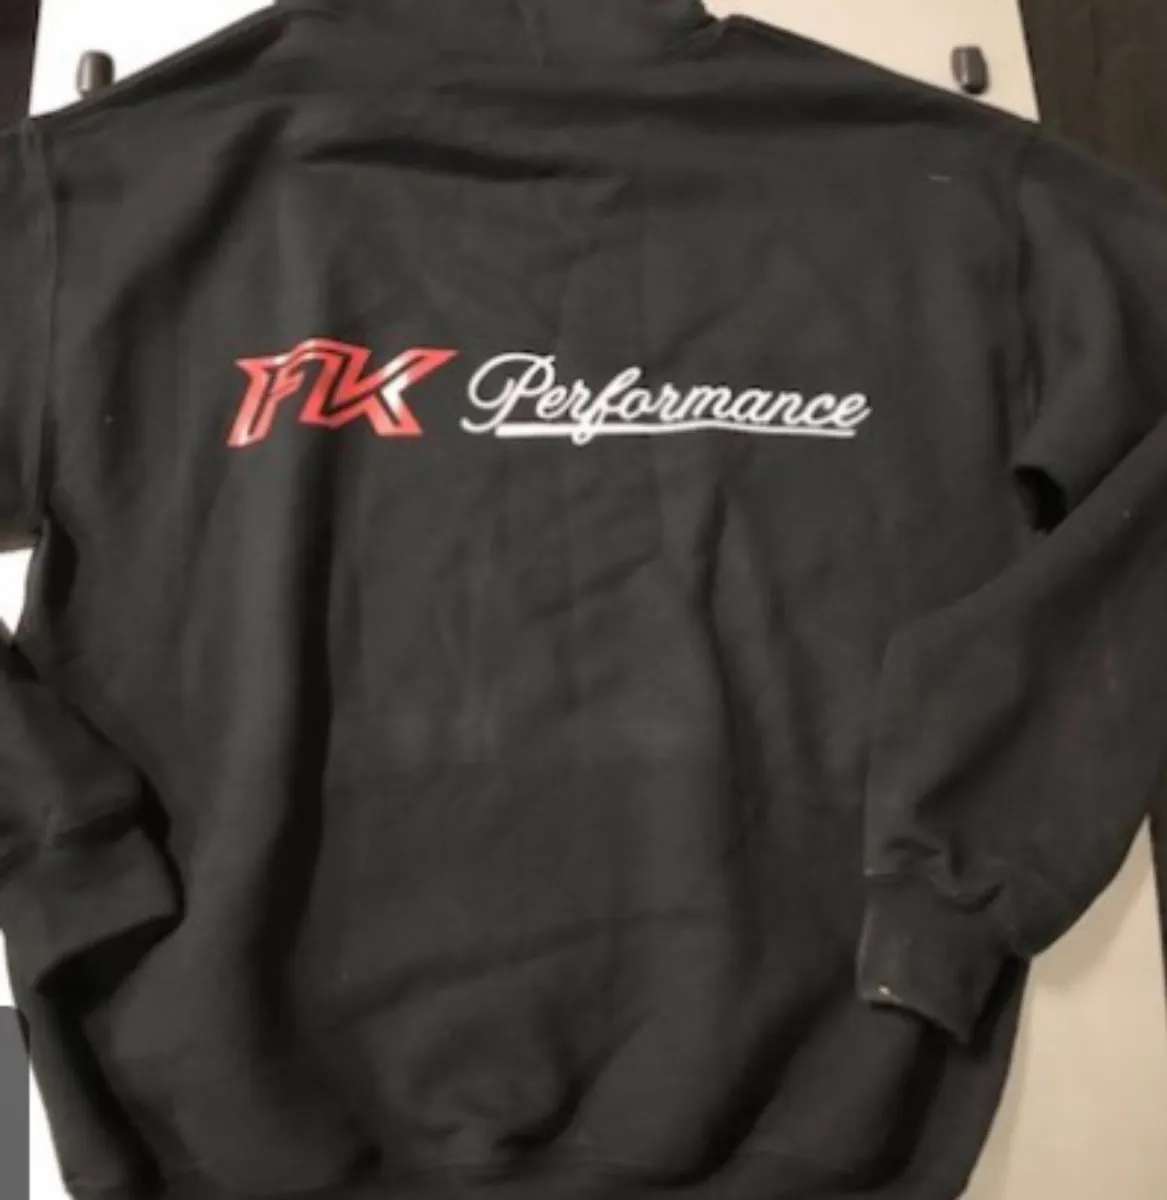 Fk performance logo hoody all sizes - Image 1